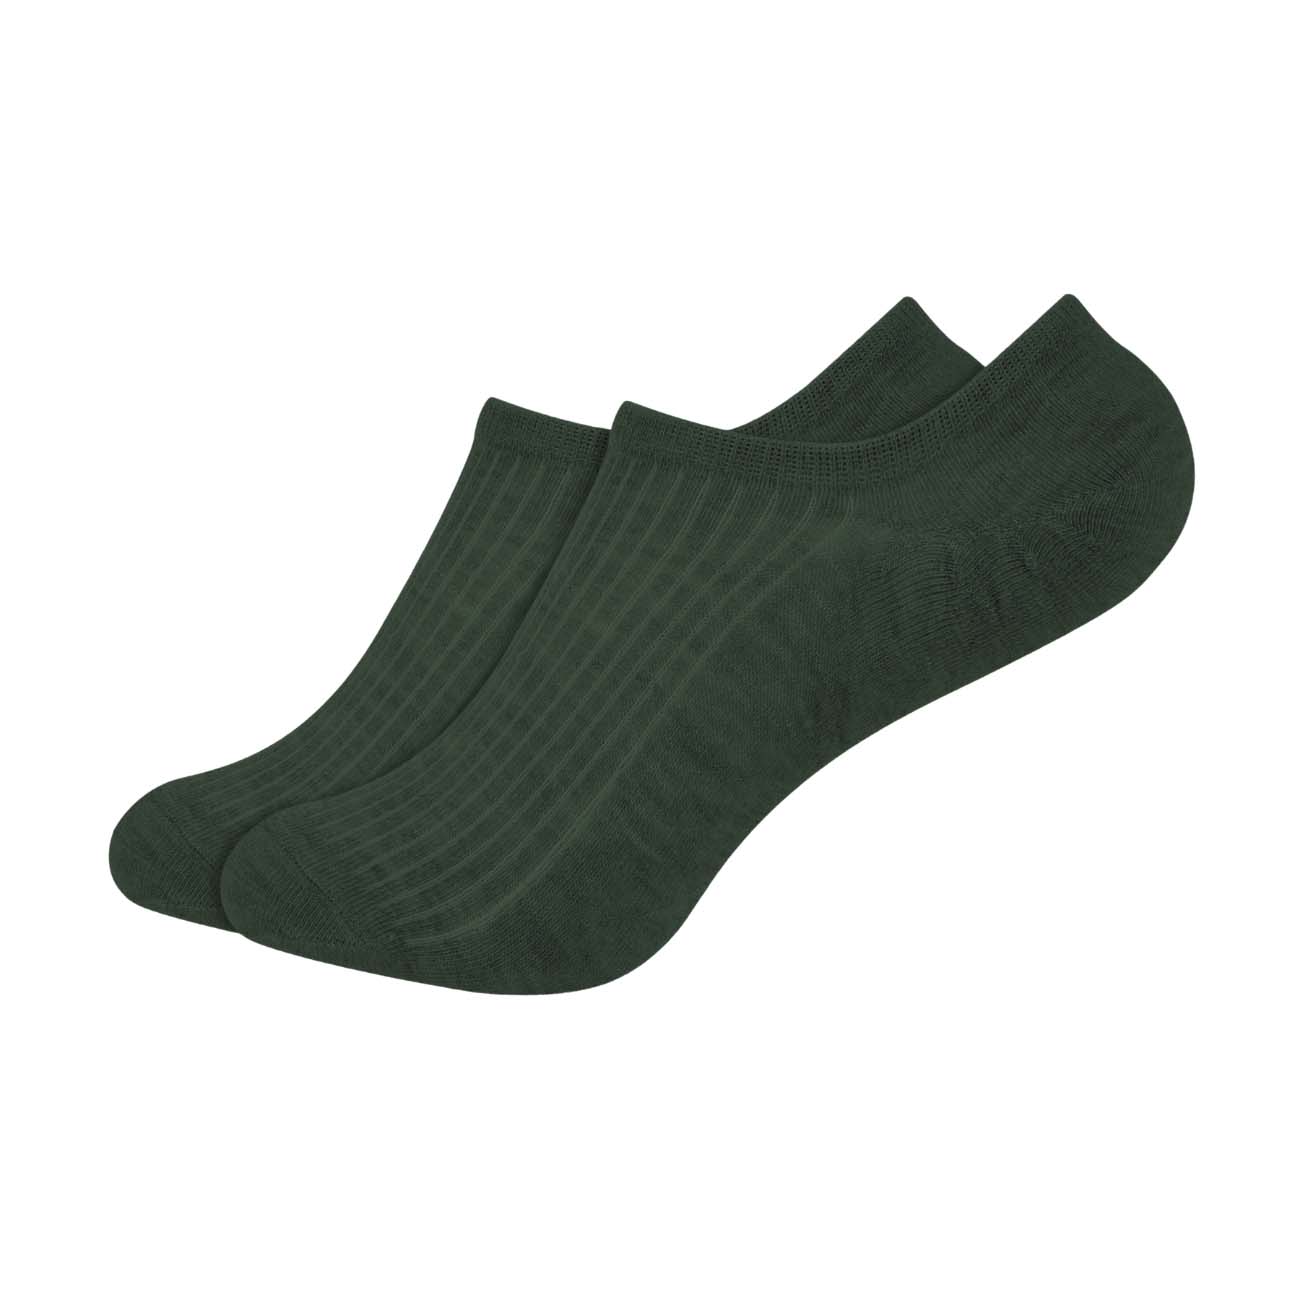 Men's Plain Colored Striped Invisible Foot Socks - IDENTITY Apparel Shop